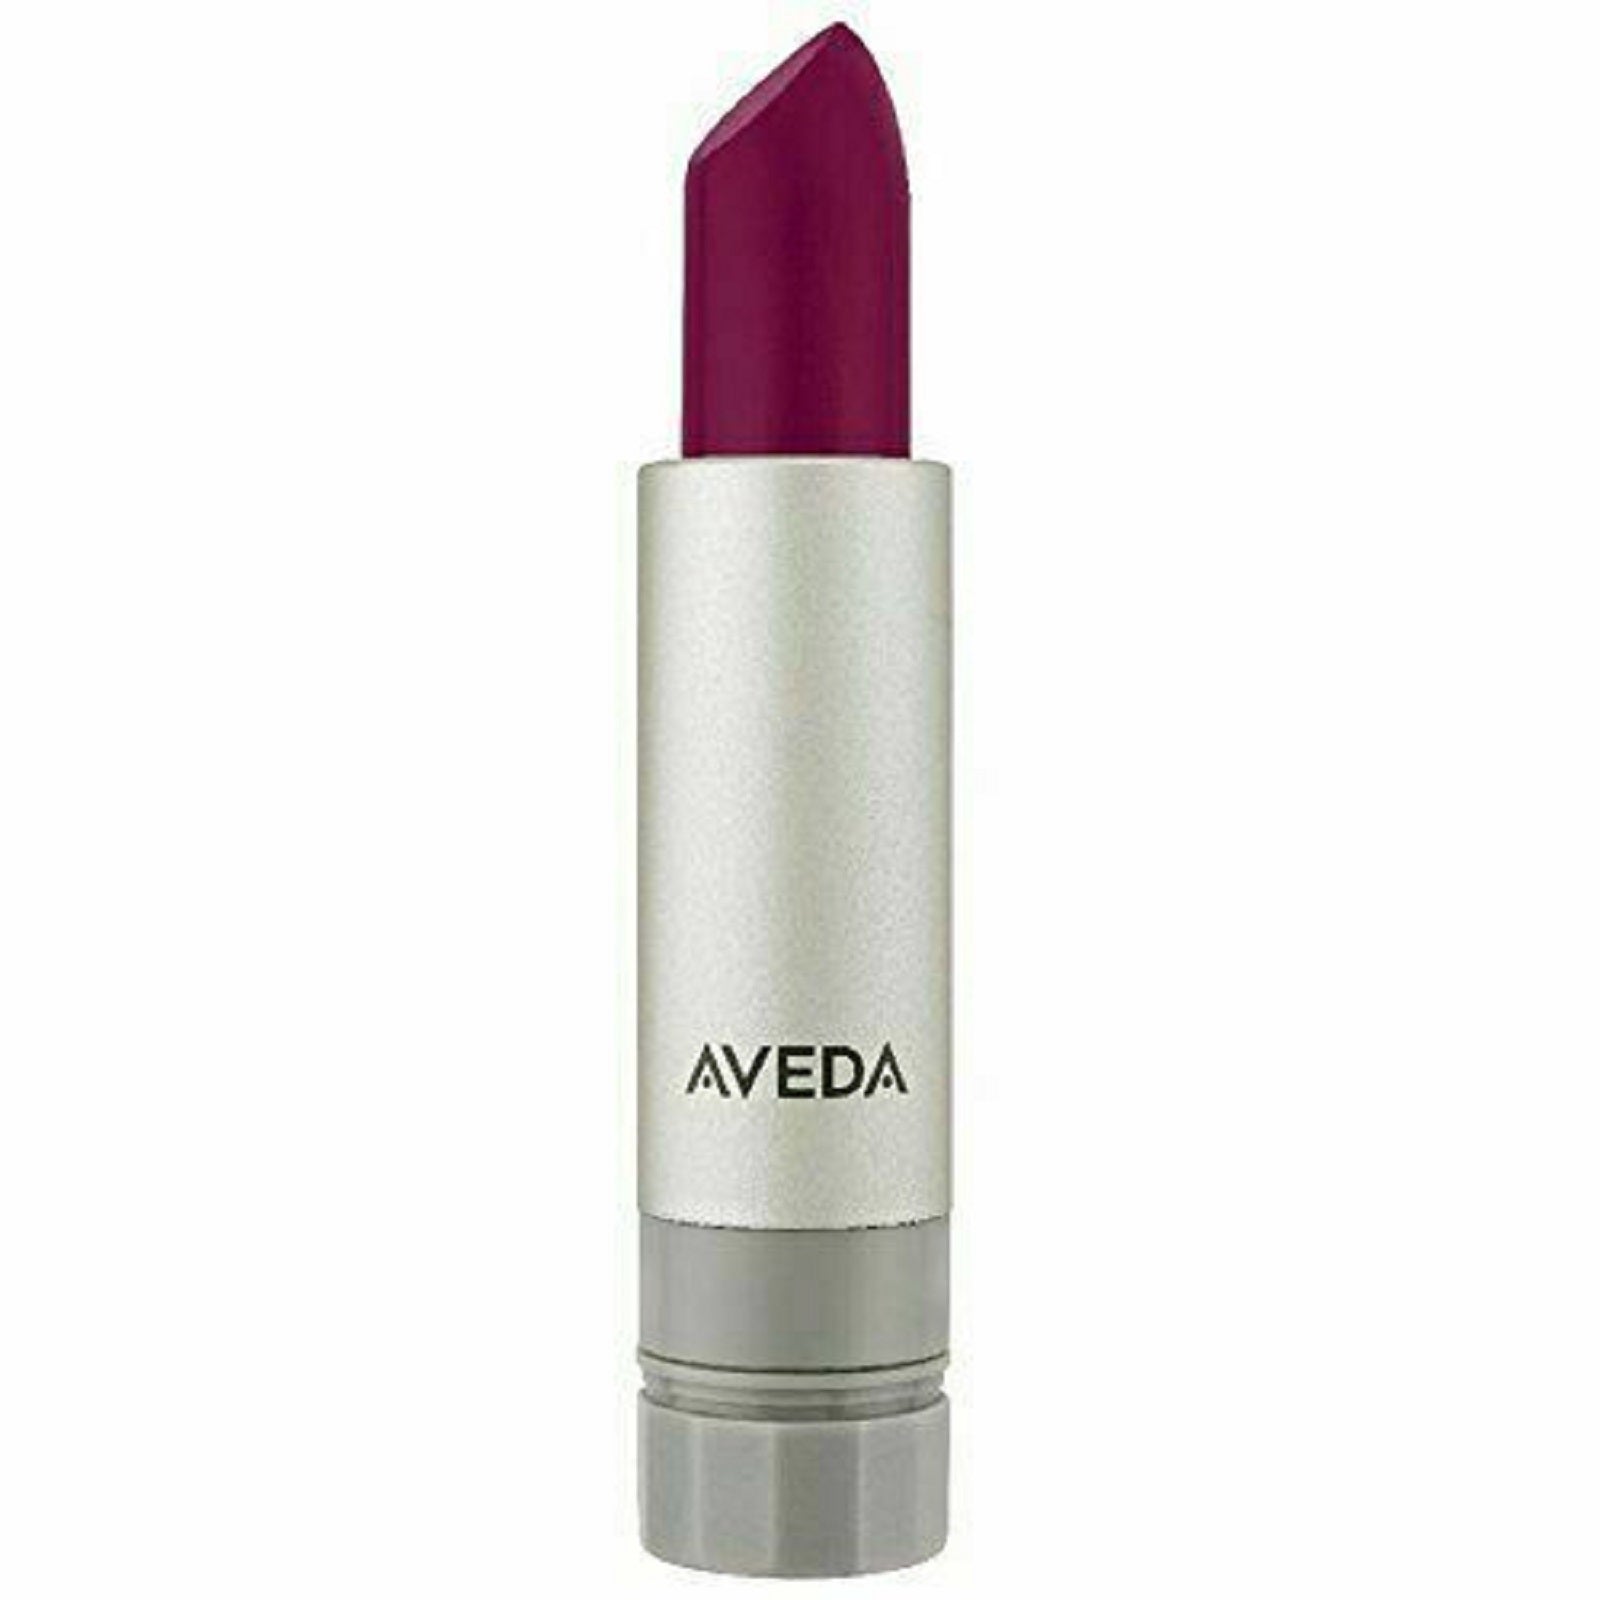 AVEDA new lipstick lip color Sangria Bloom 960 Nourish-Mint discontinued